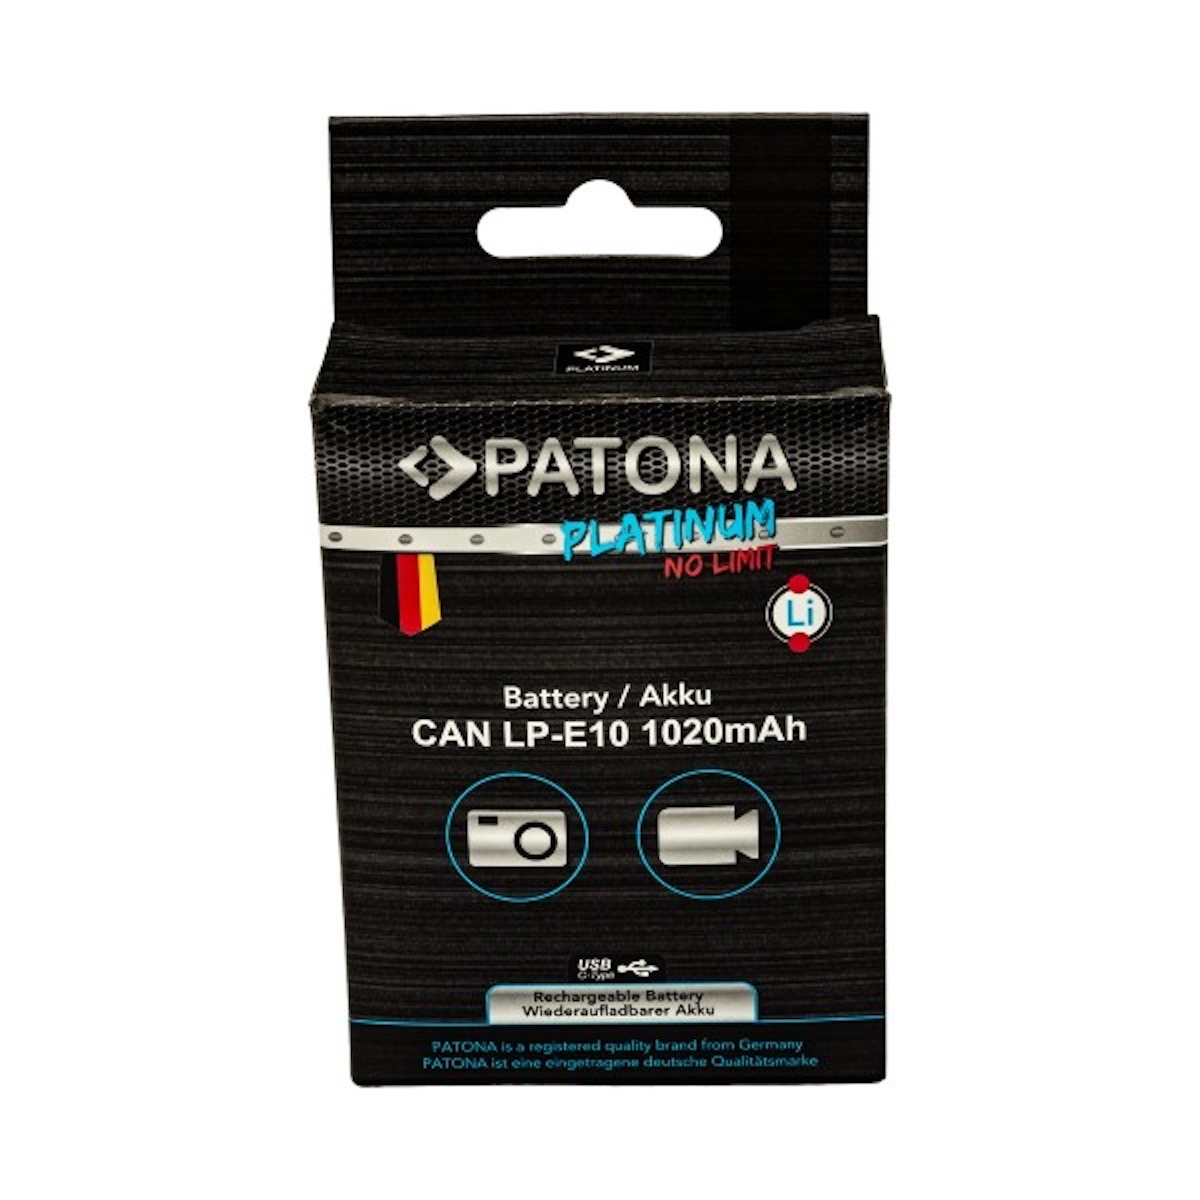 Patona Platinum Akku mit USB-C Input f. Canon LP-E10